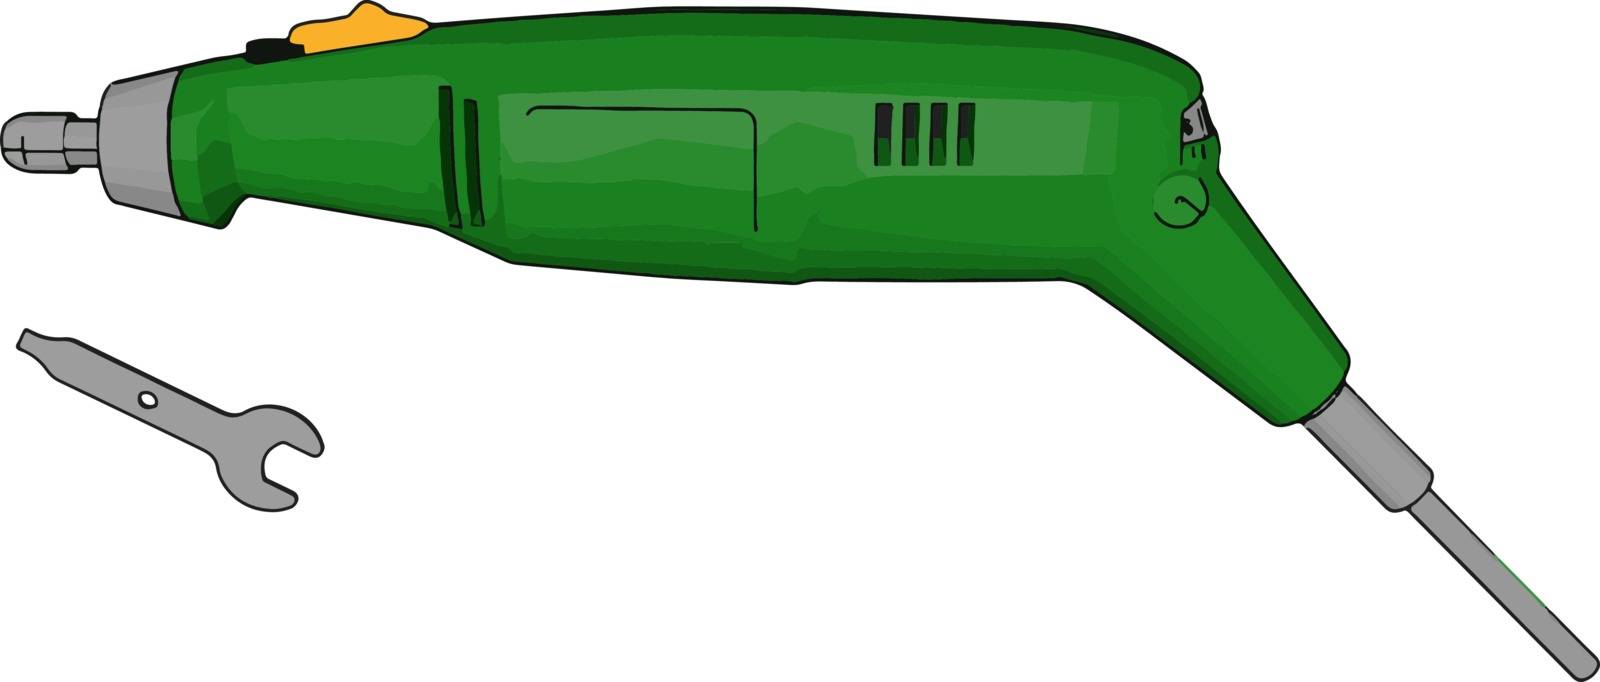 Green tool, illustration, vector on white background. by Morphart